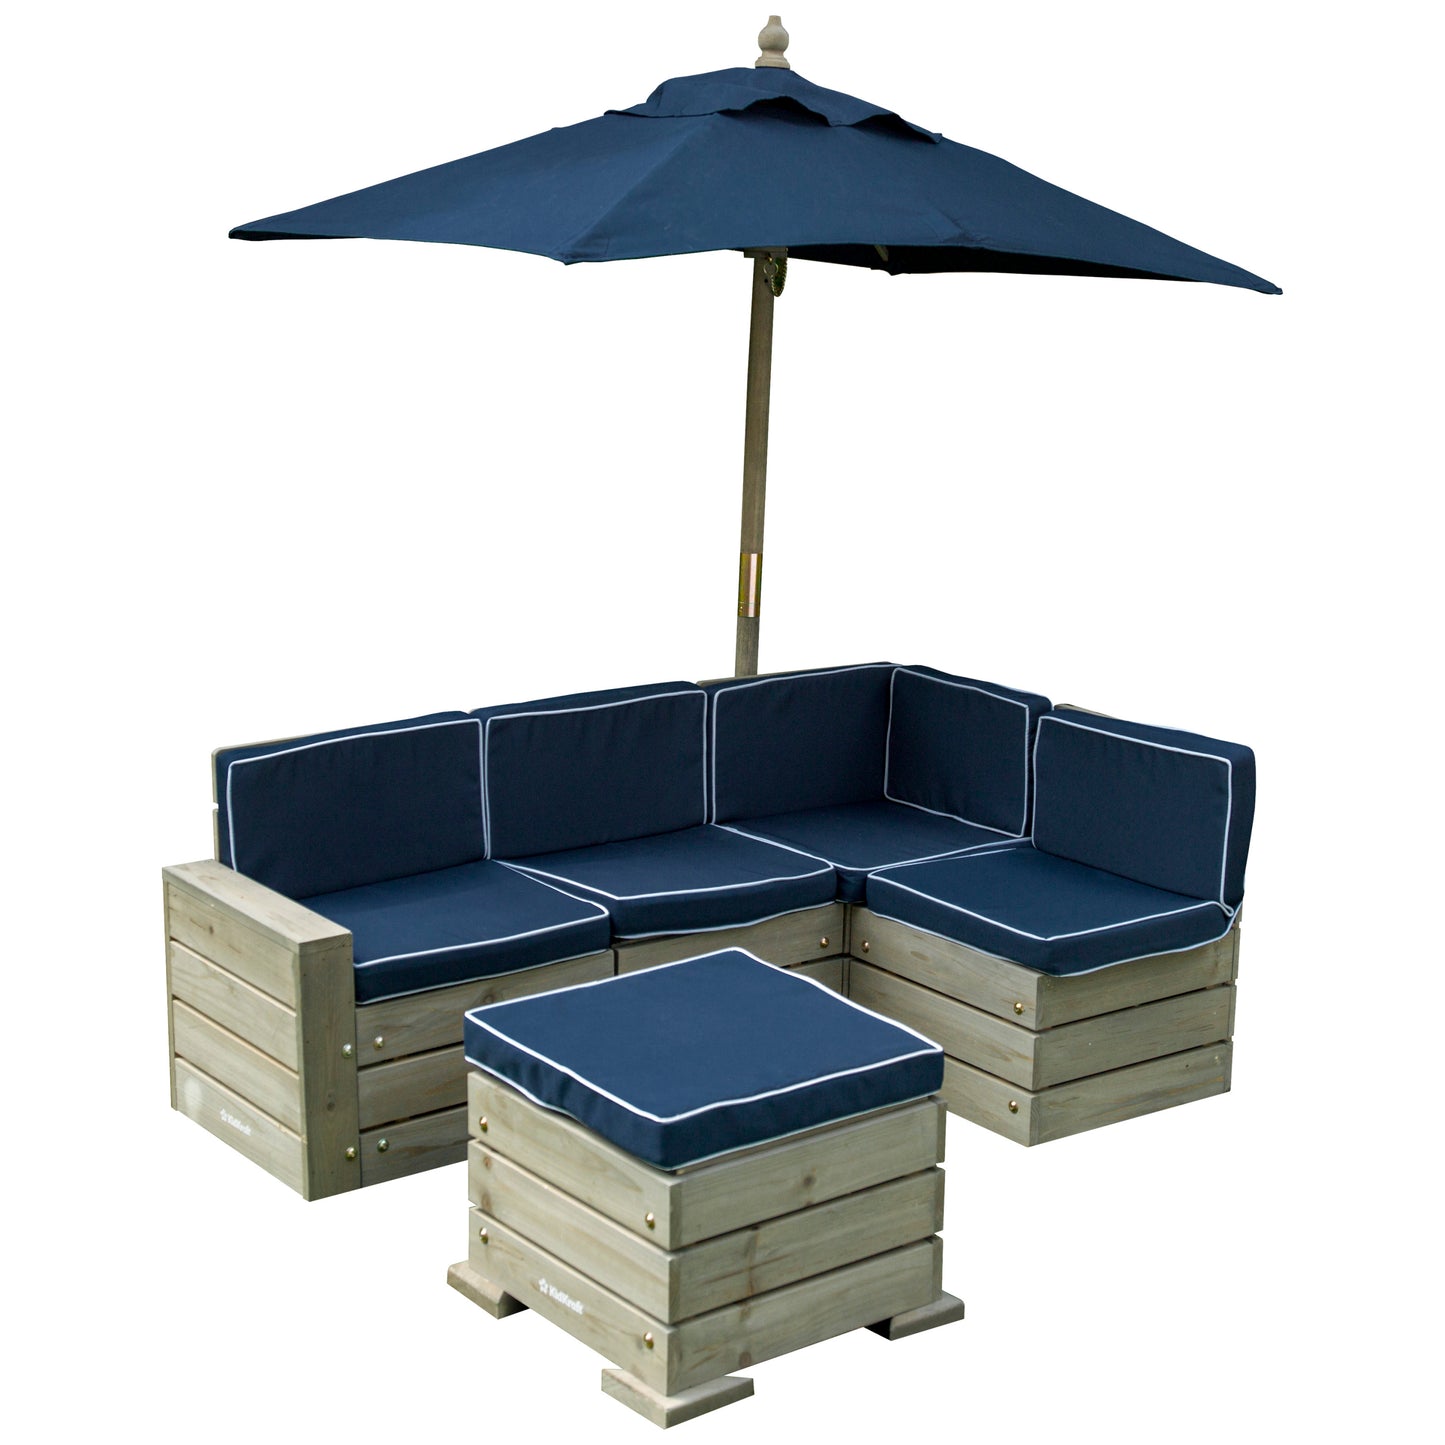 KidKraft Outdoor Sectional, Ottoman & Umbrella Set - Barnwood Gray & Navy